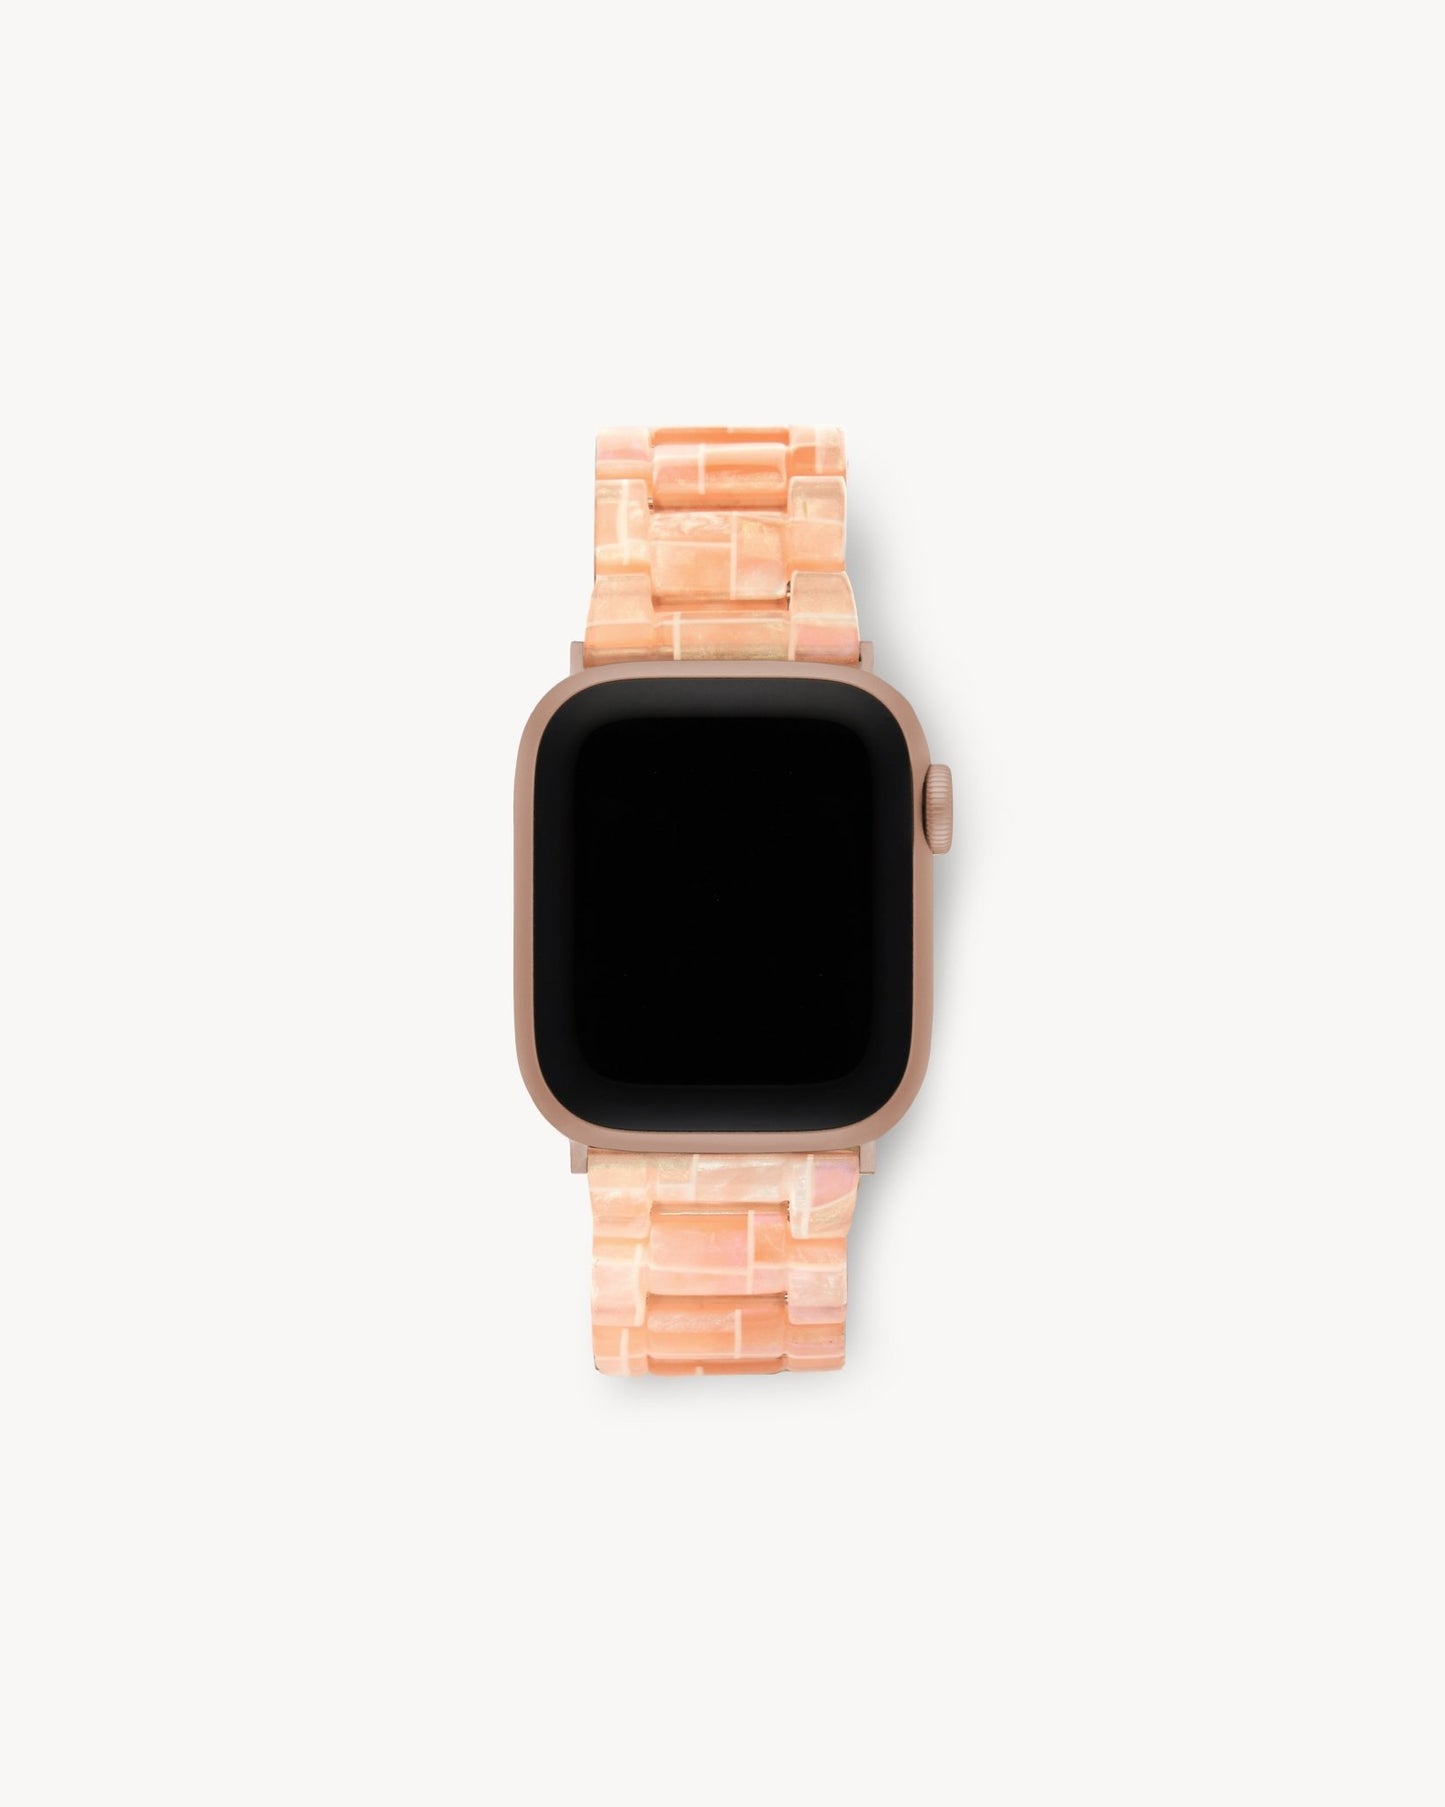 Apple Watch Band in Apricot Shell Checker - MACHETE